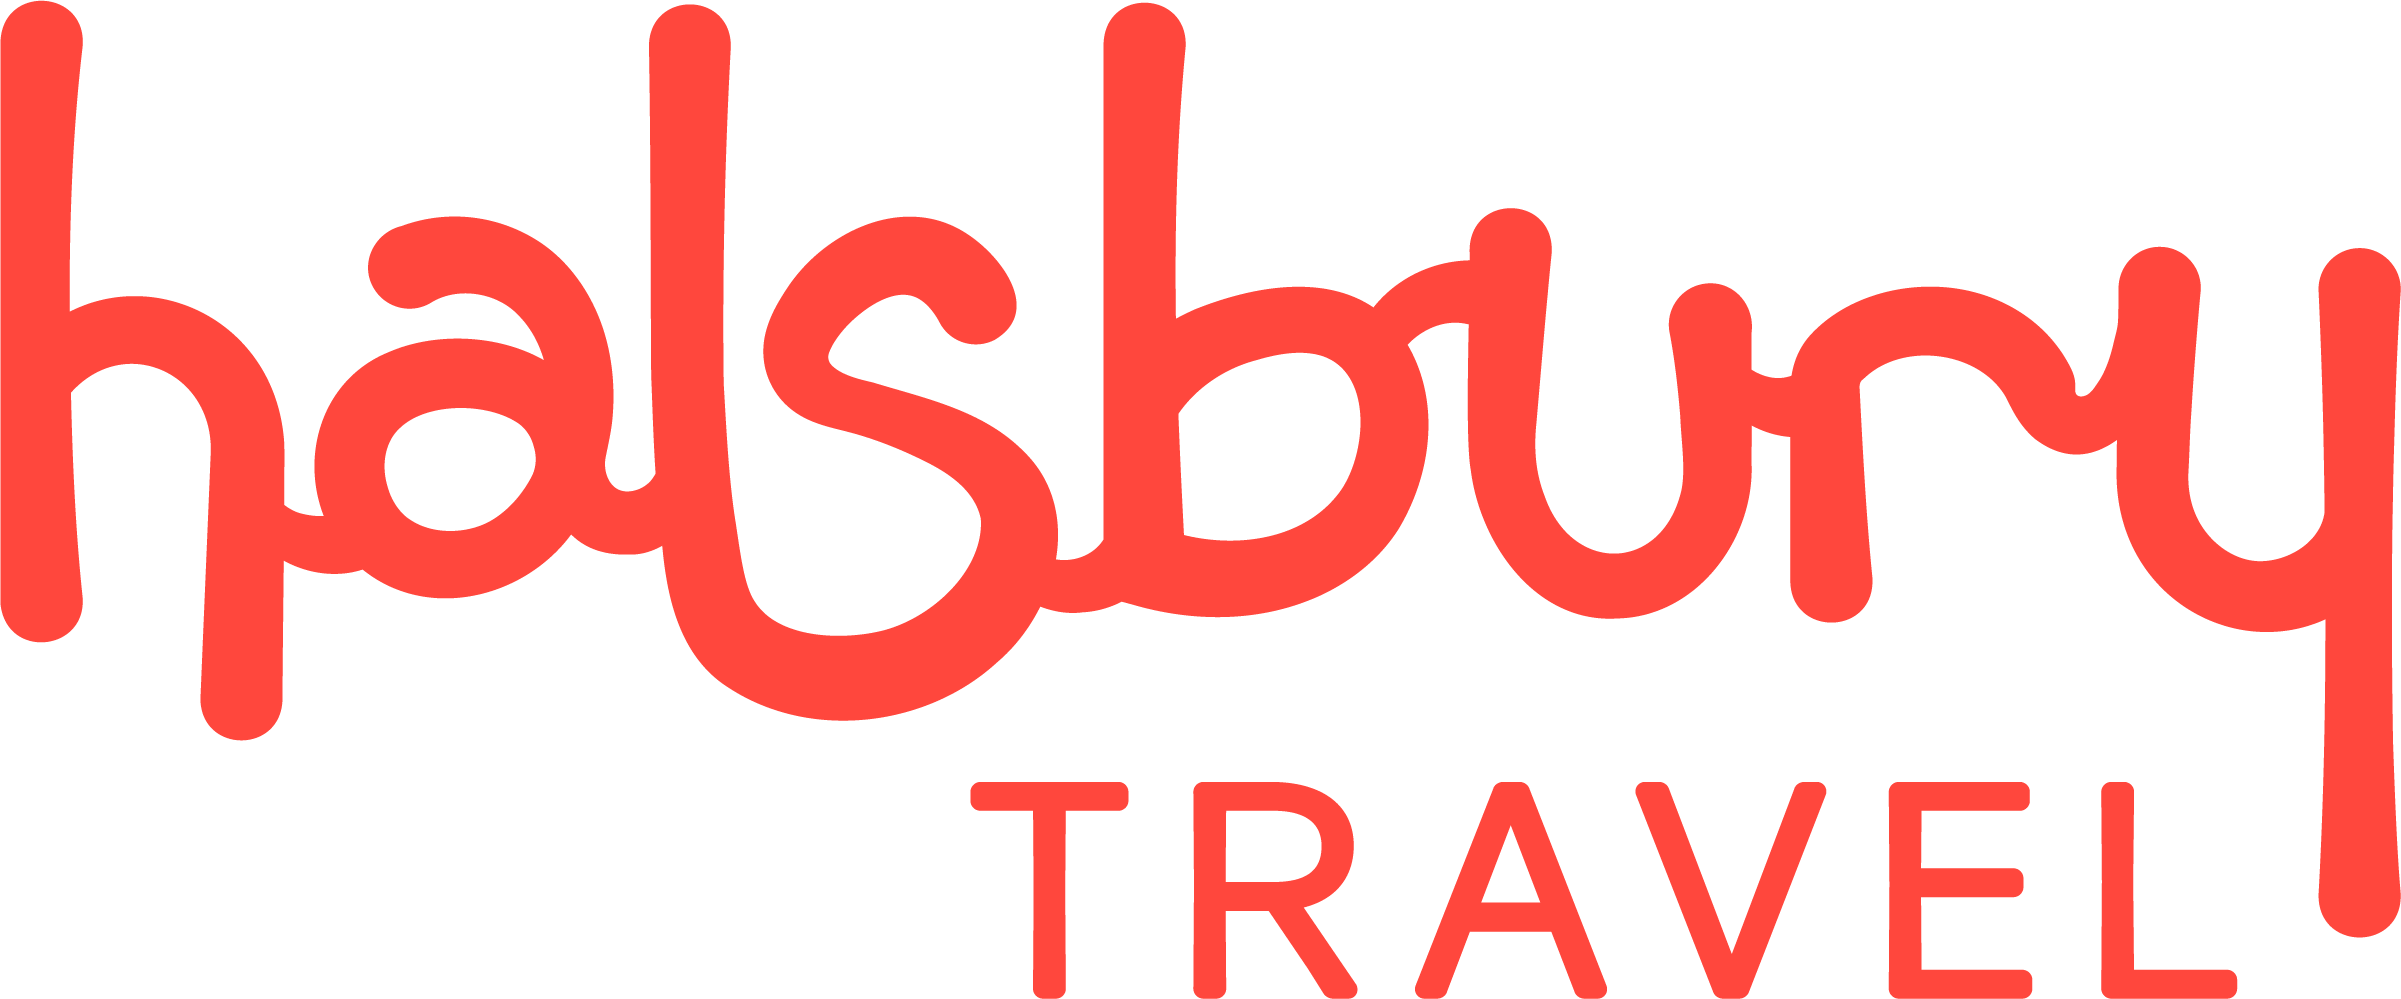 Halsbury Travel logo